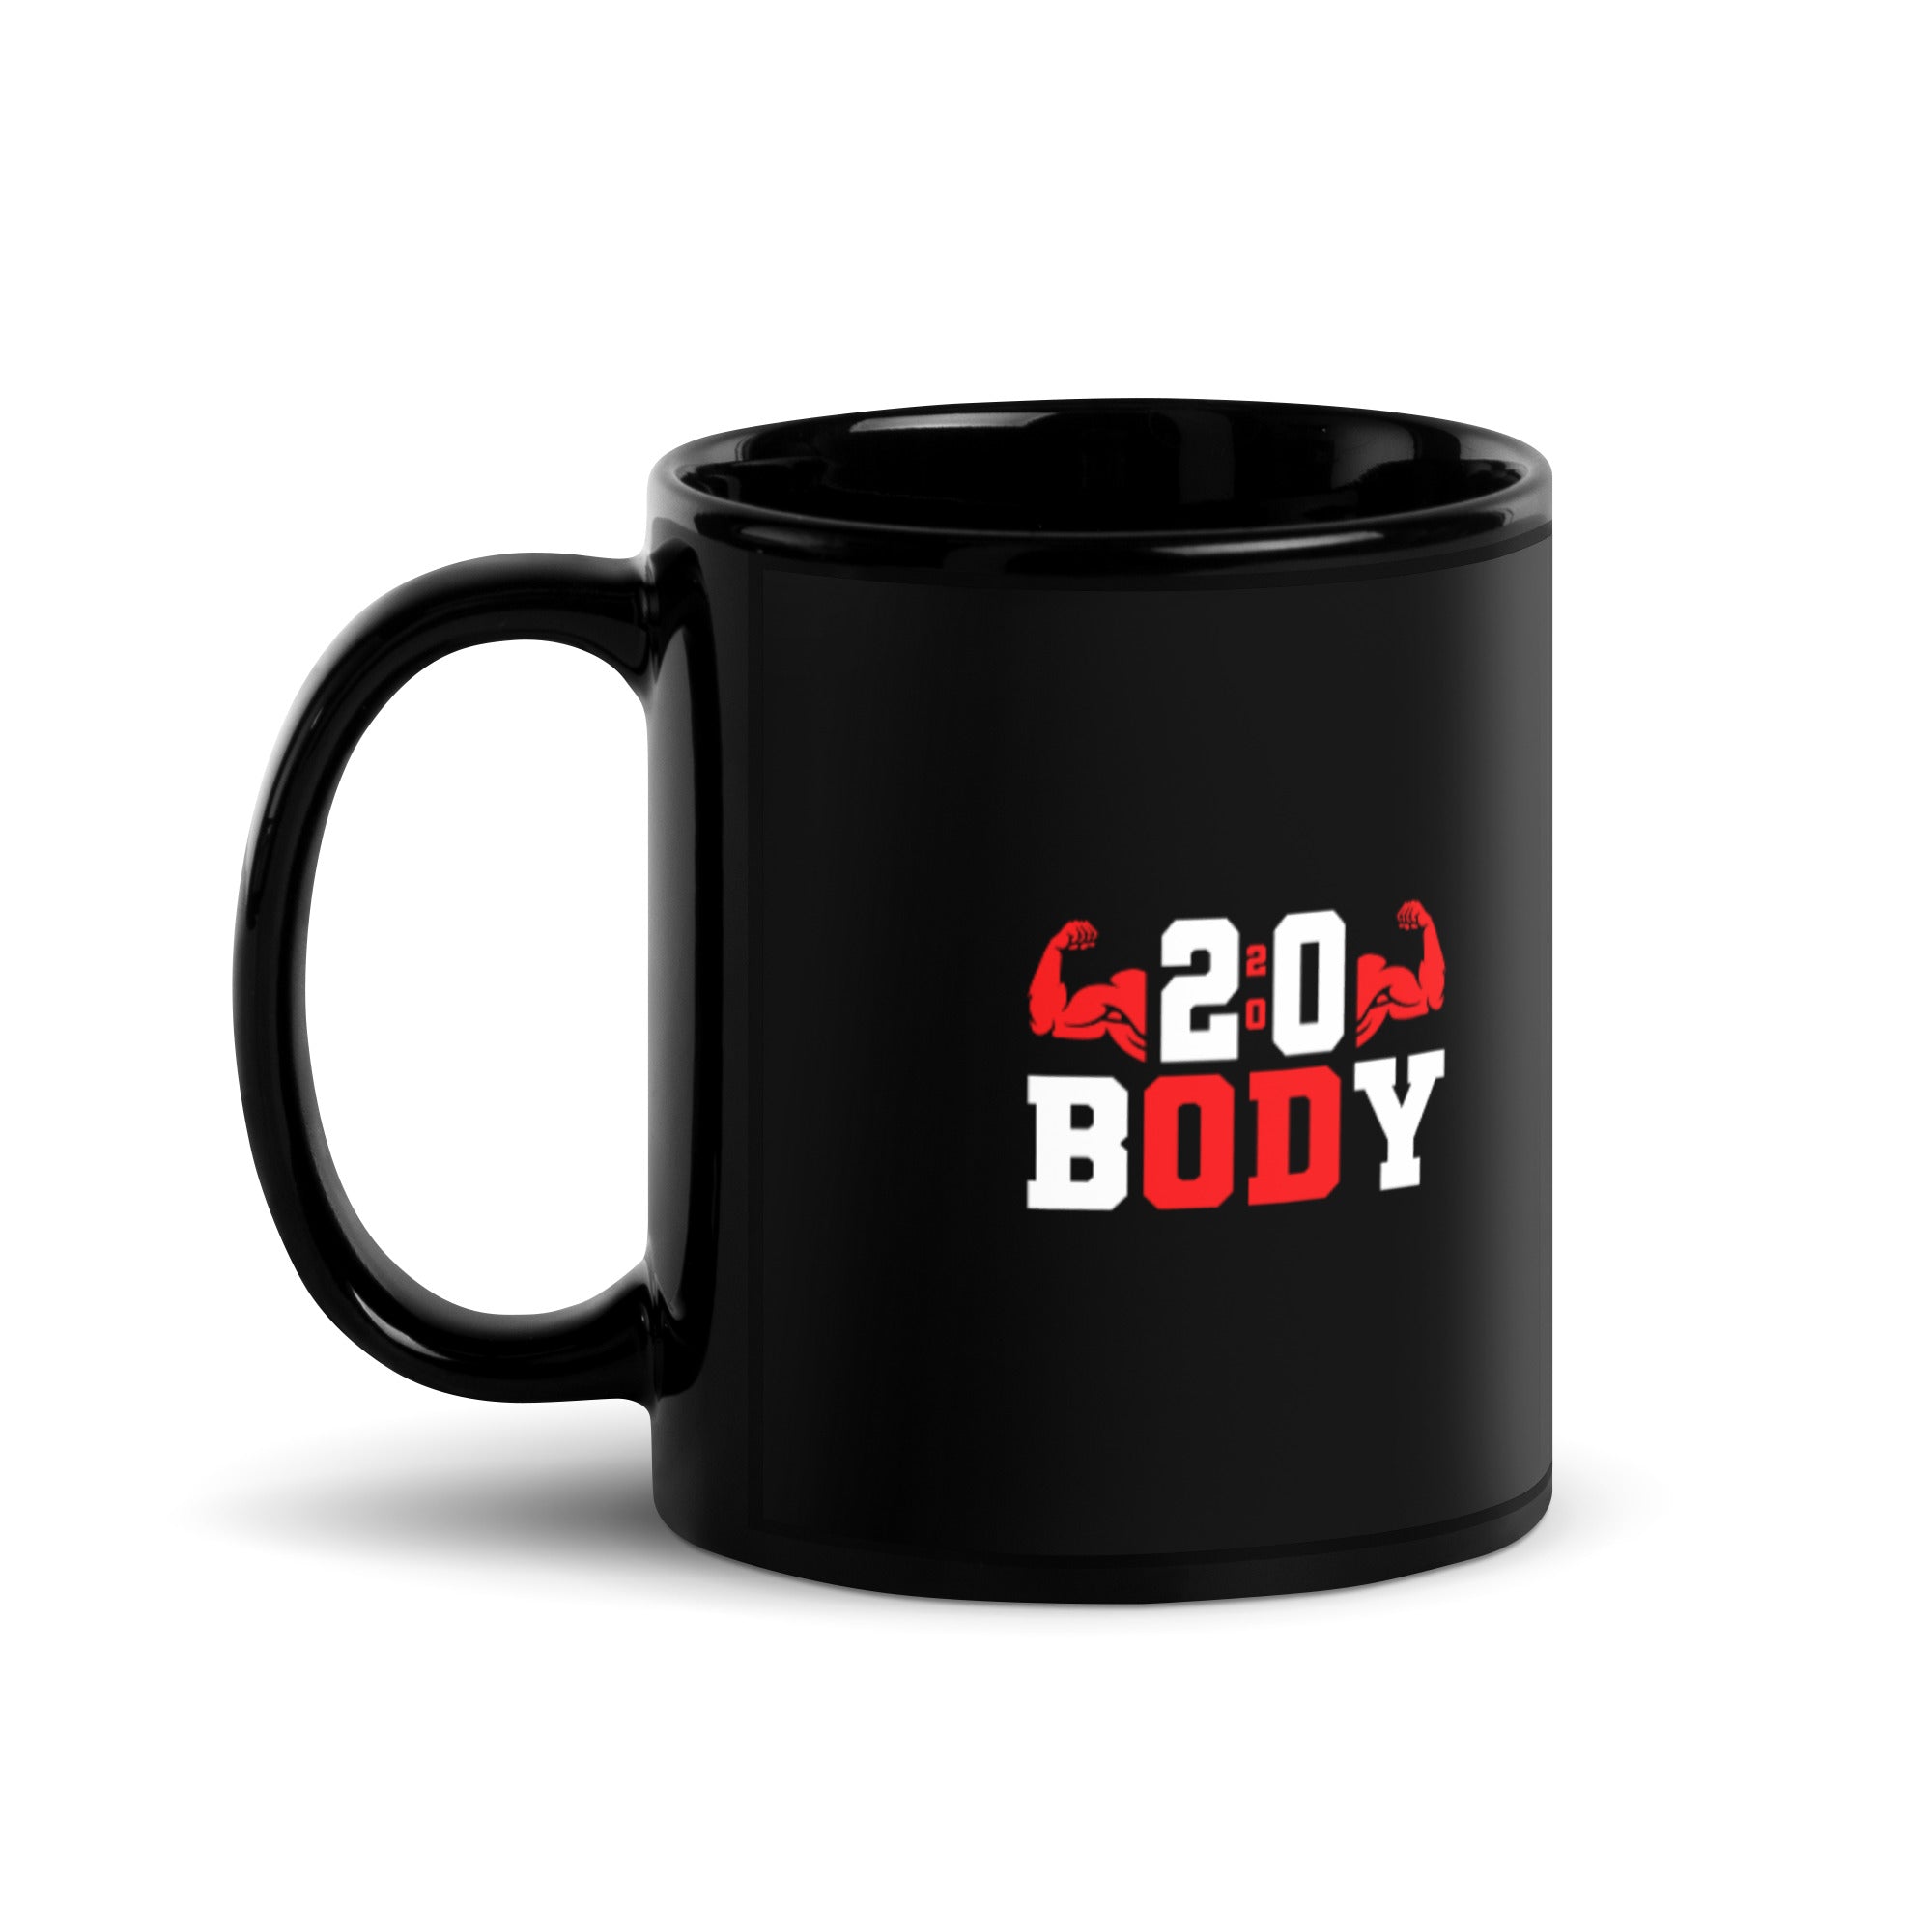 2:0 Body - Black Glossy Mug